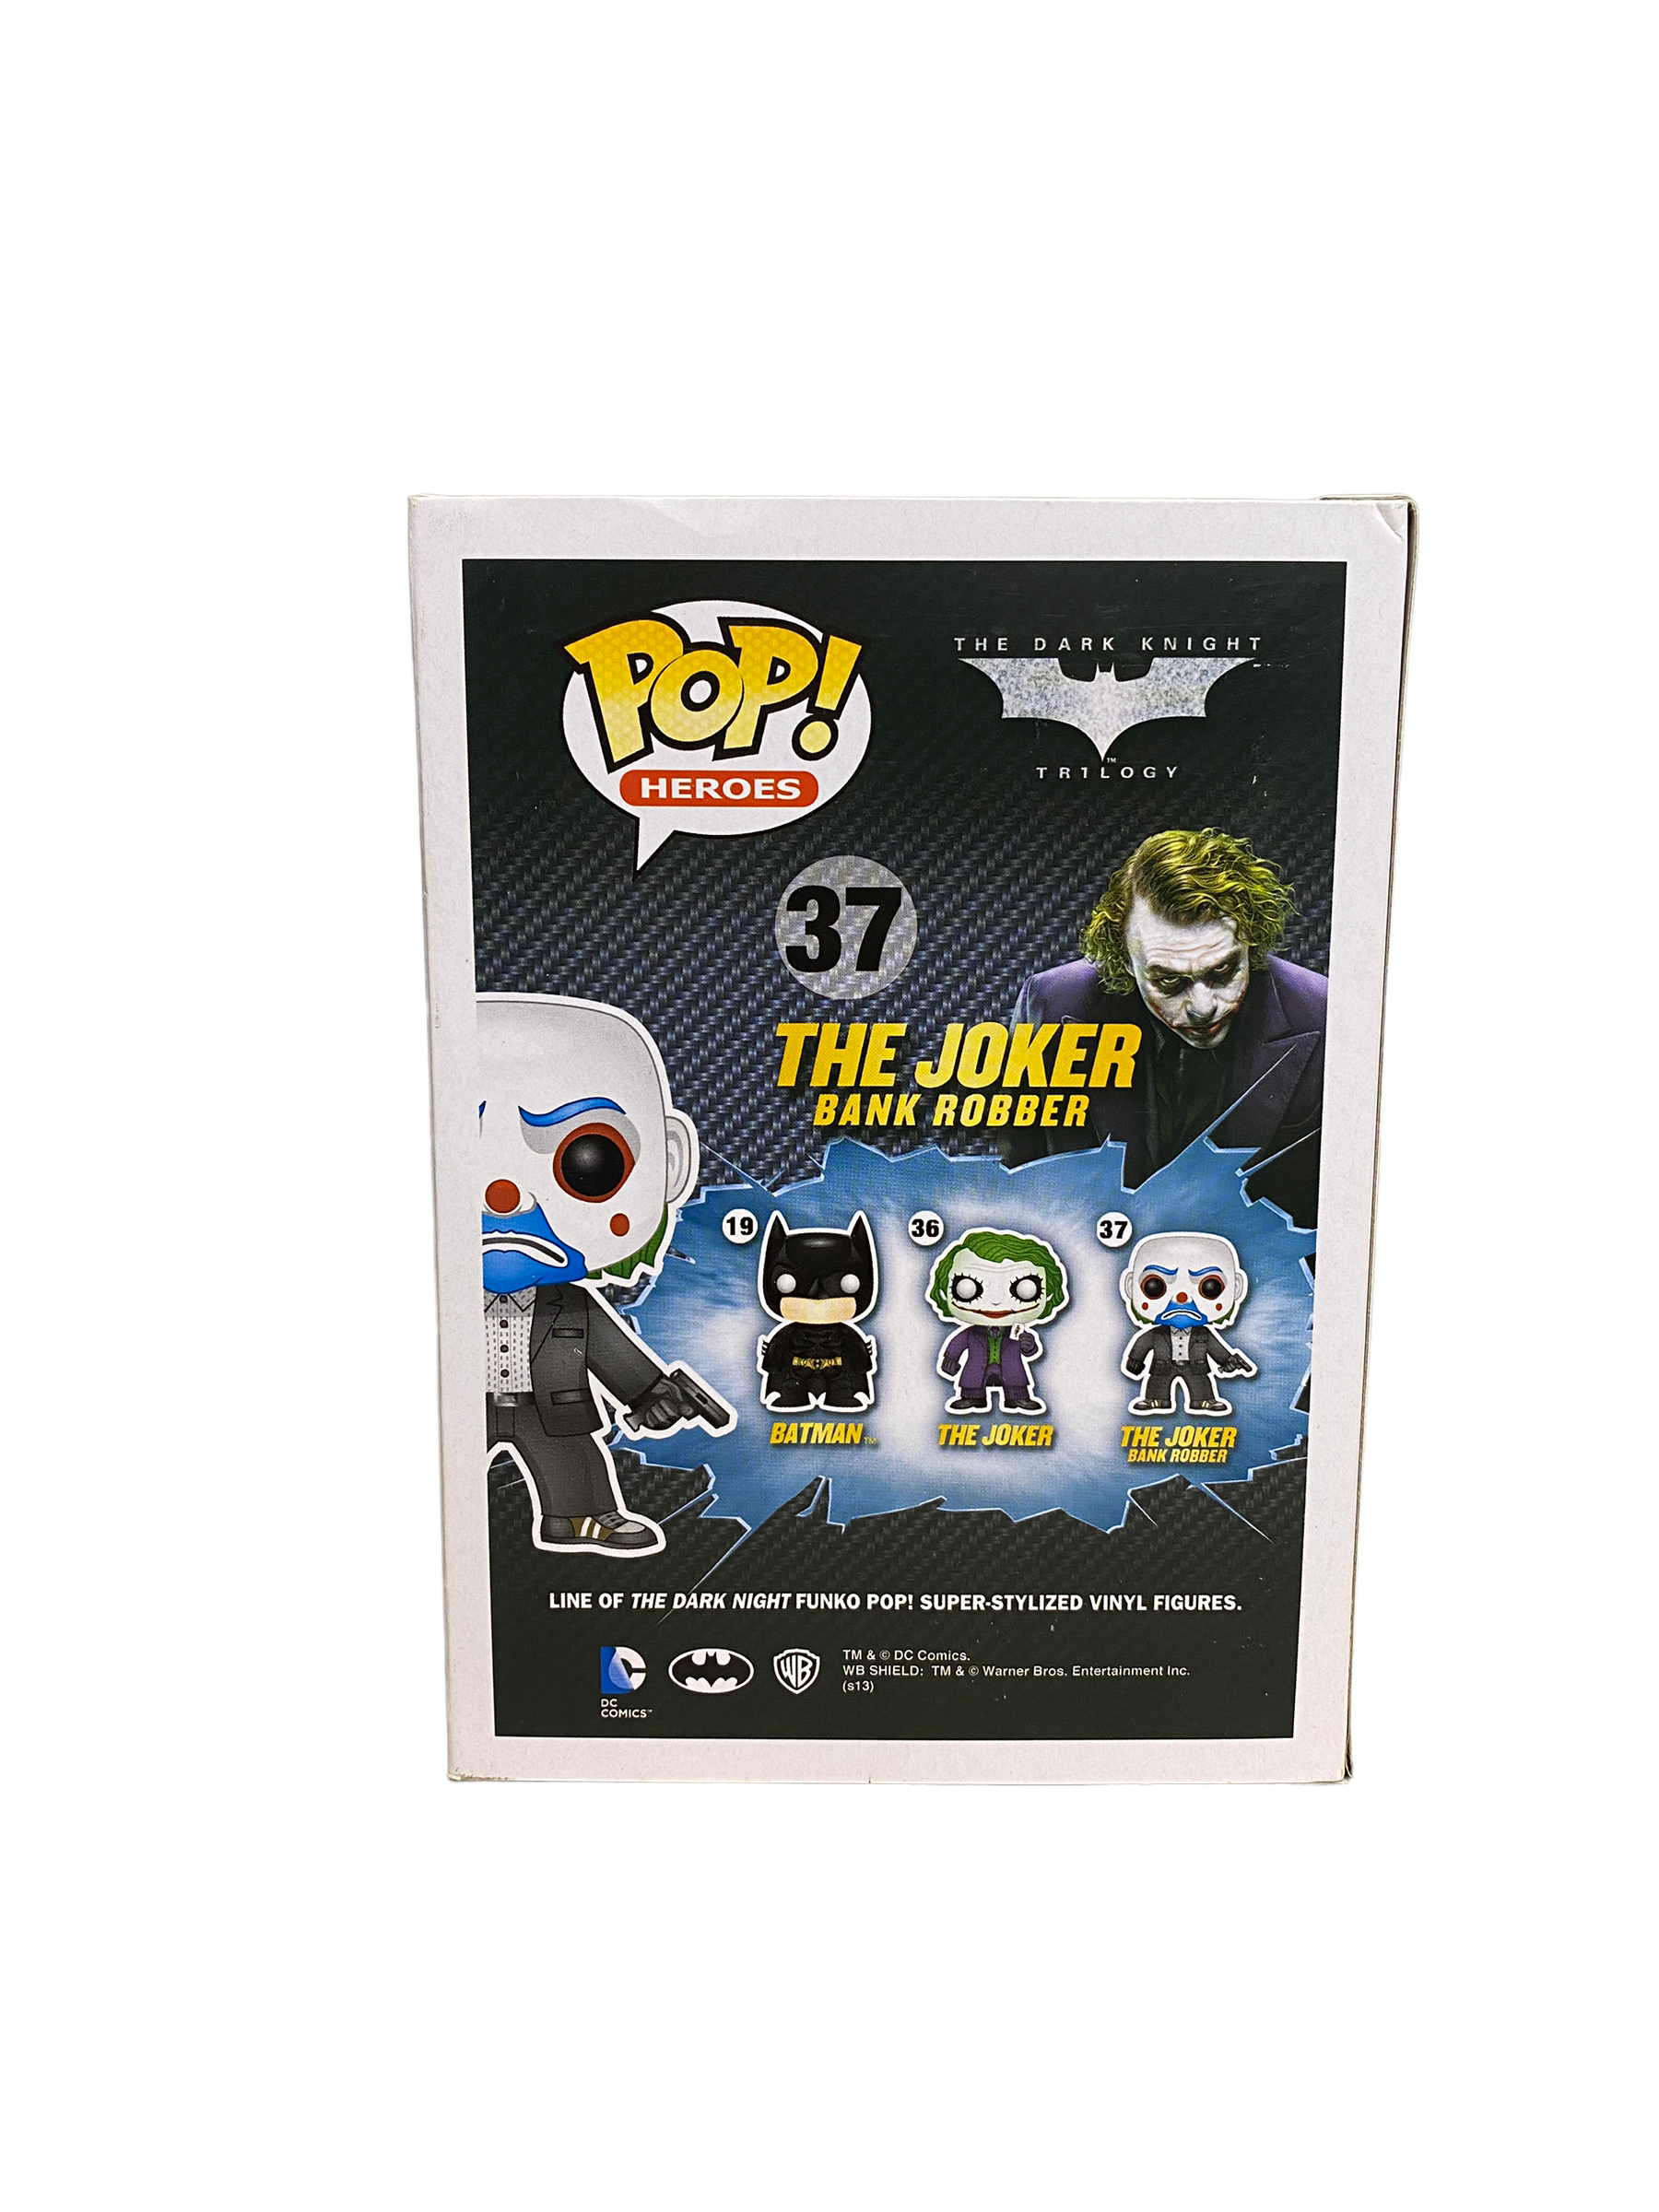 The Joker Bank Robber #37 Funko Pop! - Batman: The Dark Knight Trilogy - 2013 Pop! - Condition 8.5/10